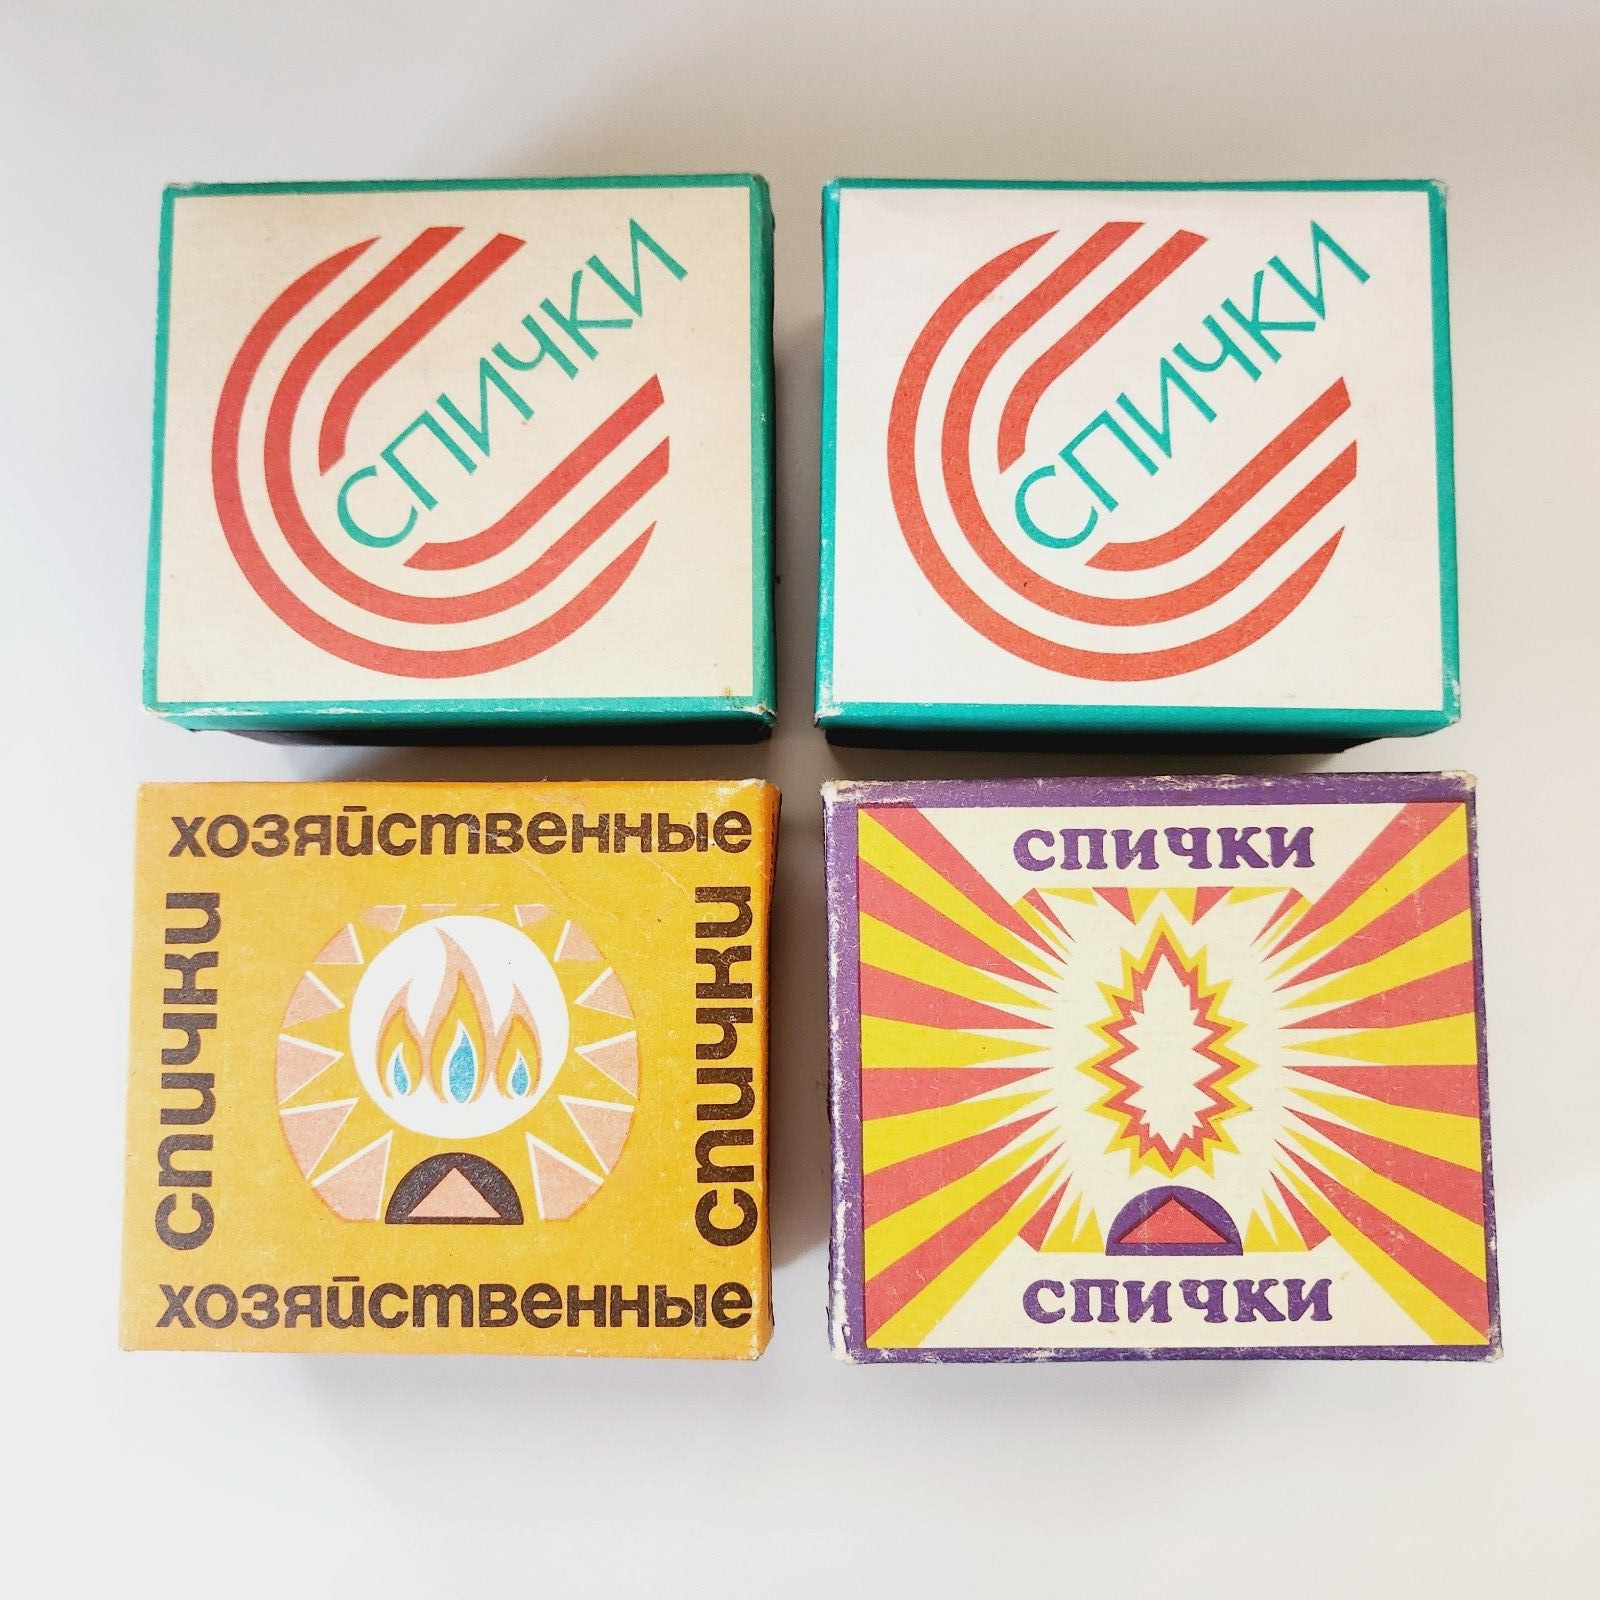 Vintage Soviet Union USSR Russia 1820's 4 Pc Large Sealed Match Boxes Retro